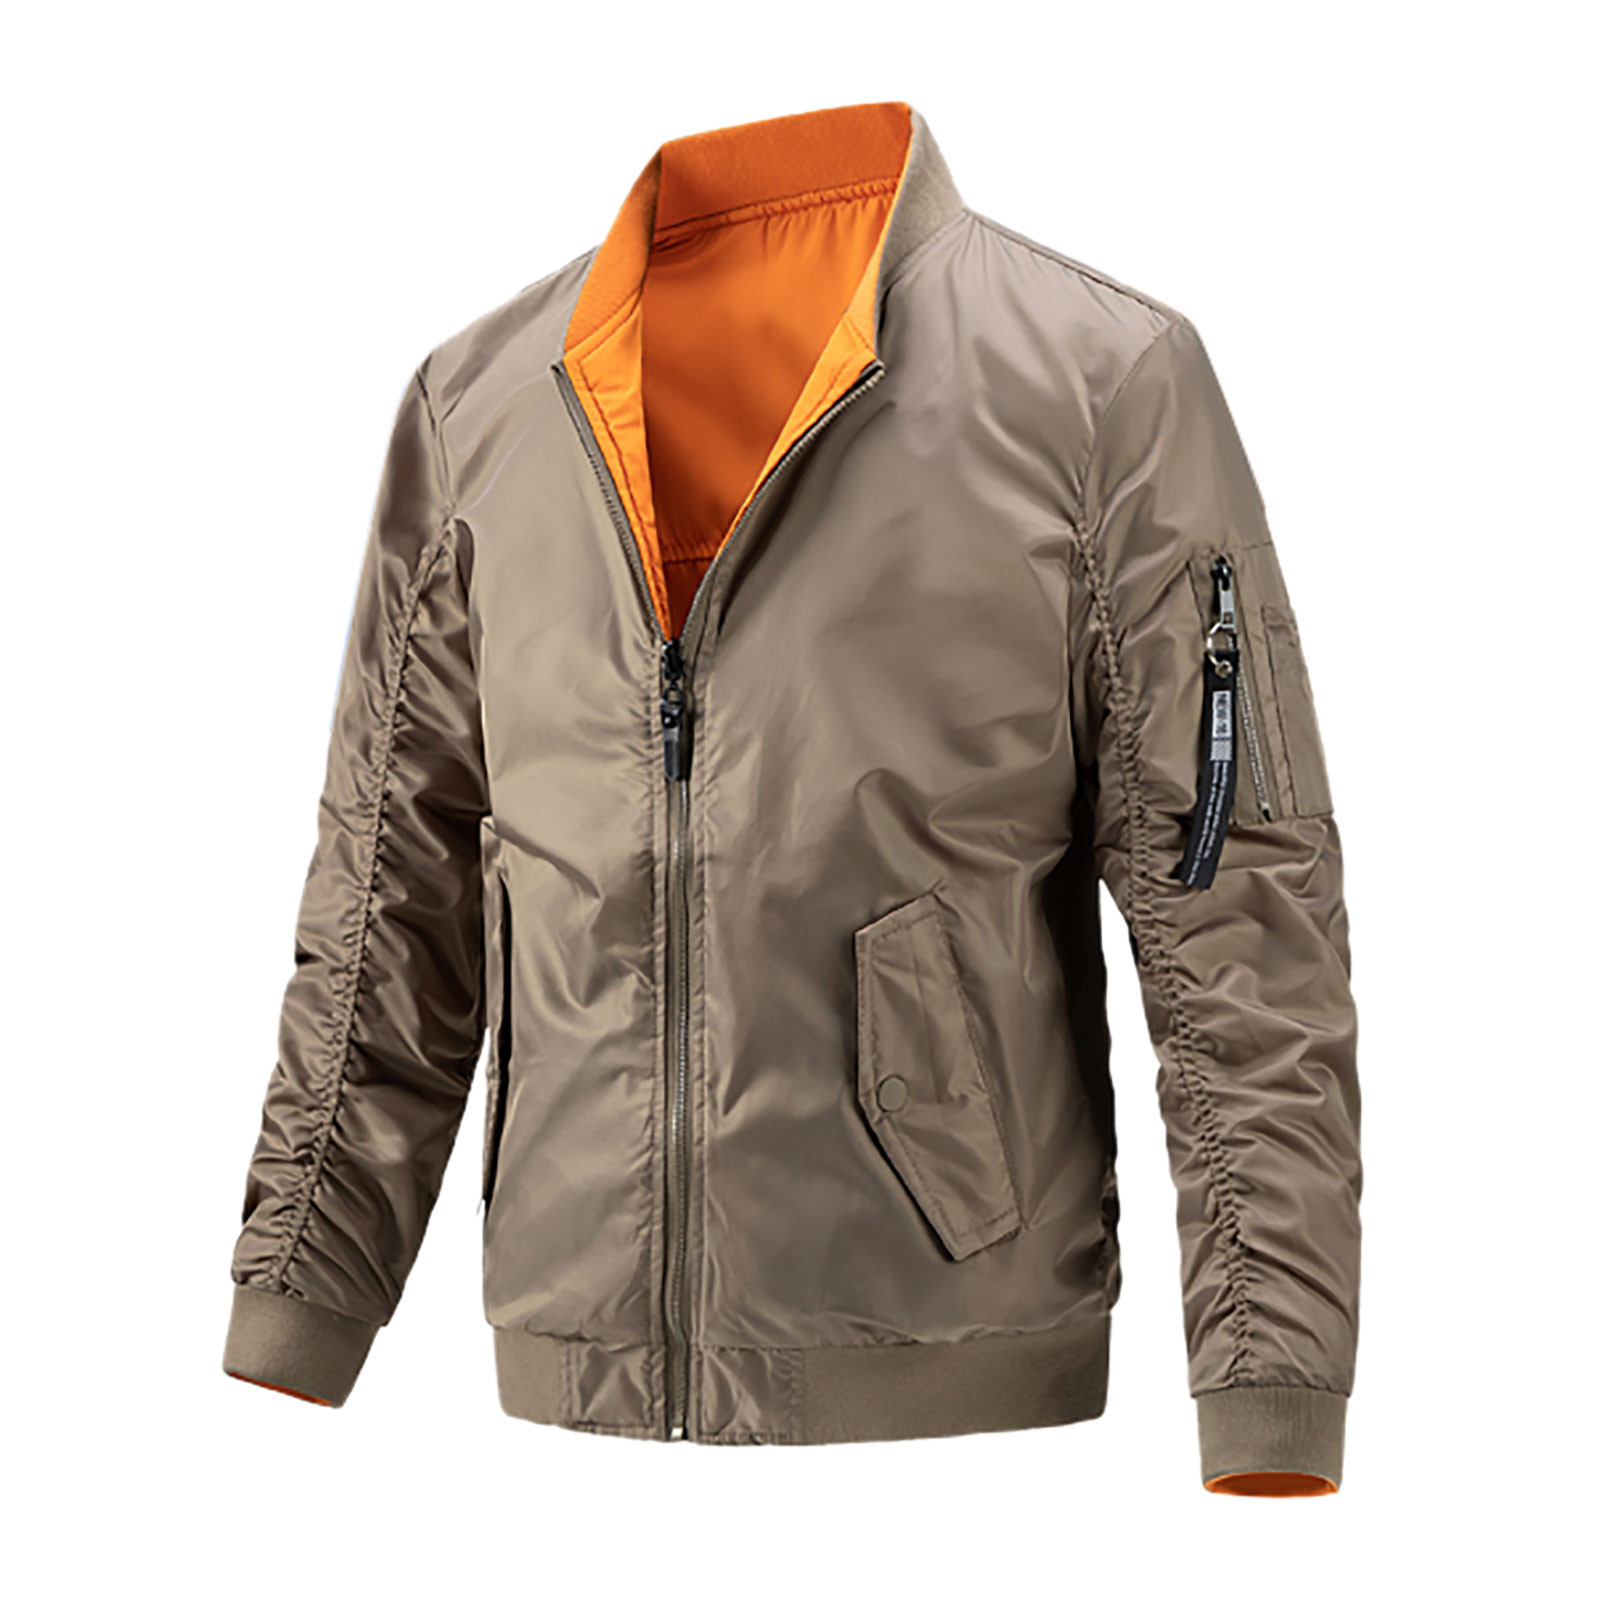 Men's Fashion Flight Suit Plus Cotton Jacket Reversible Stand Collar Jacket In Winter Warm Coat - image 2 of 5